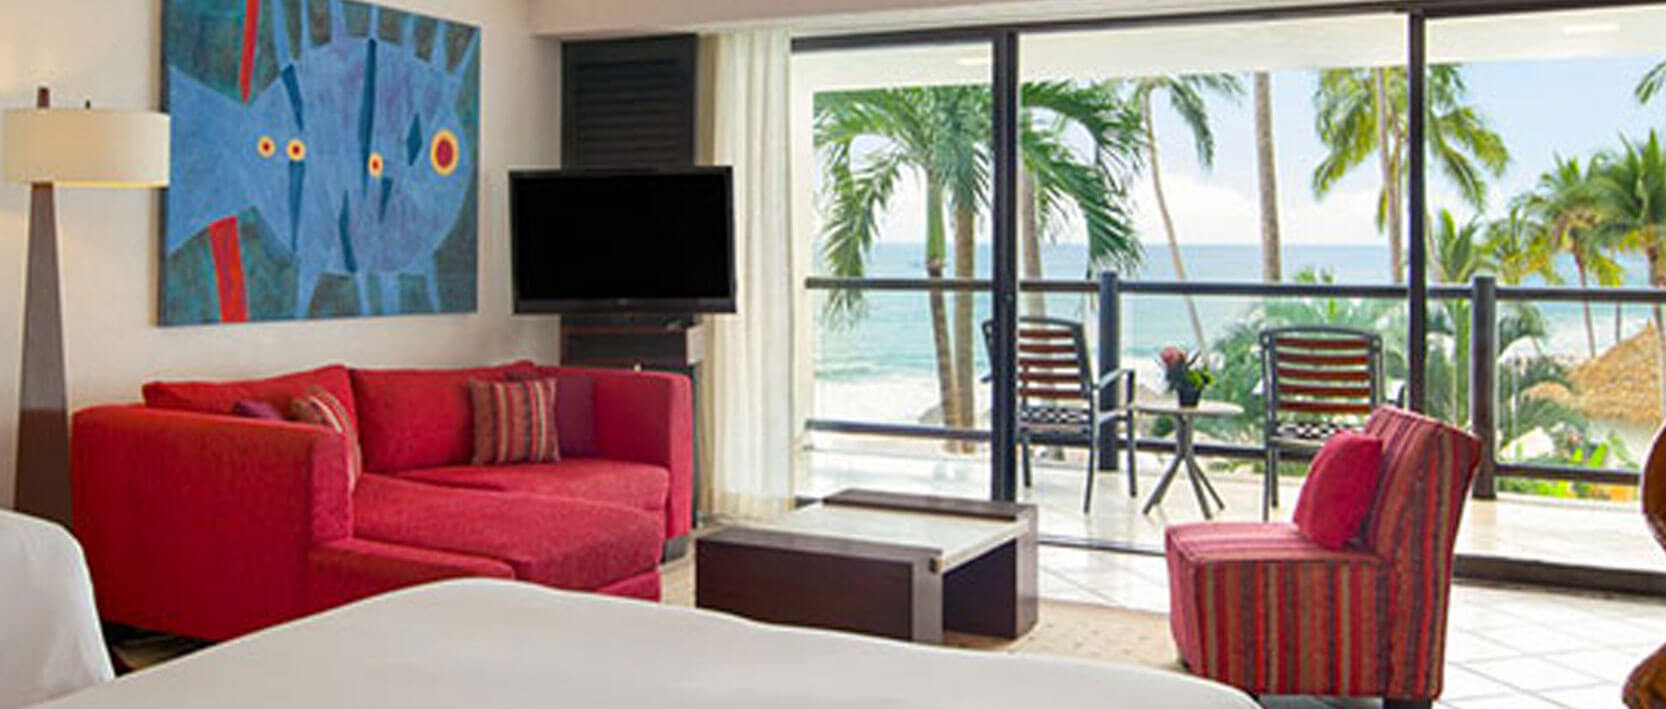 Hyatt Ziva Puerto Vallarta Accommodations - Club Ocean View Suite King or Double